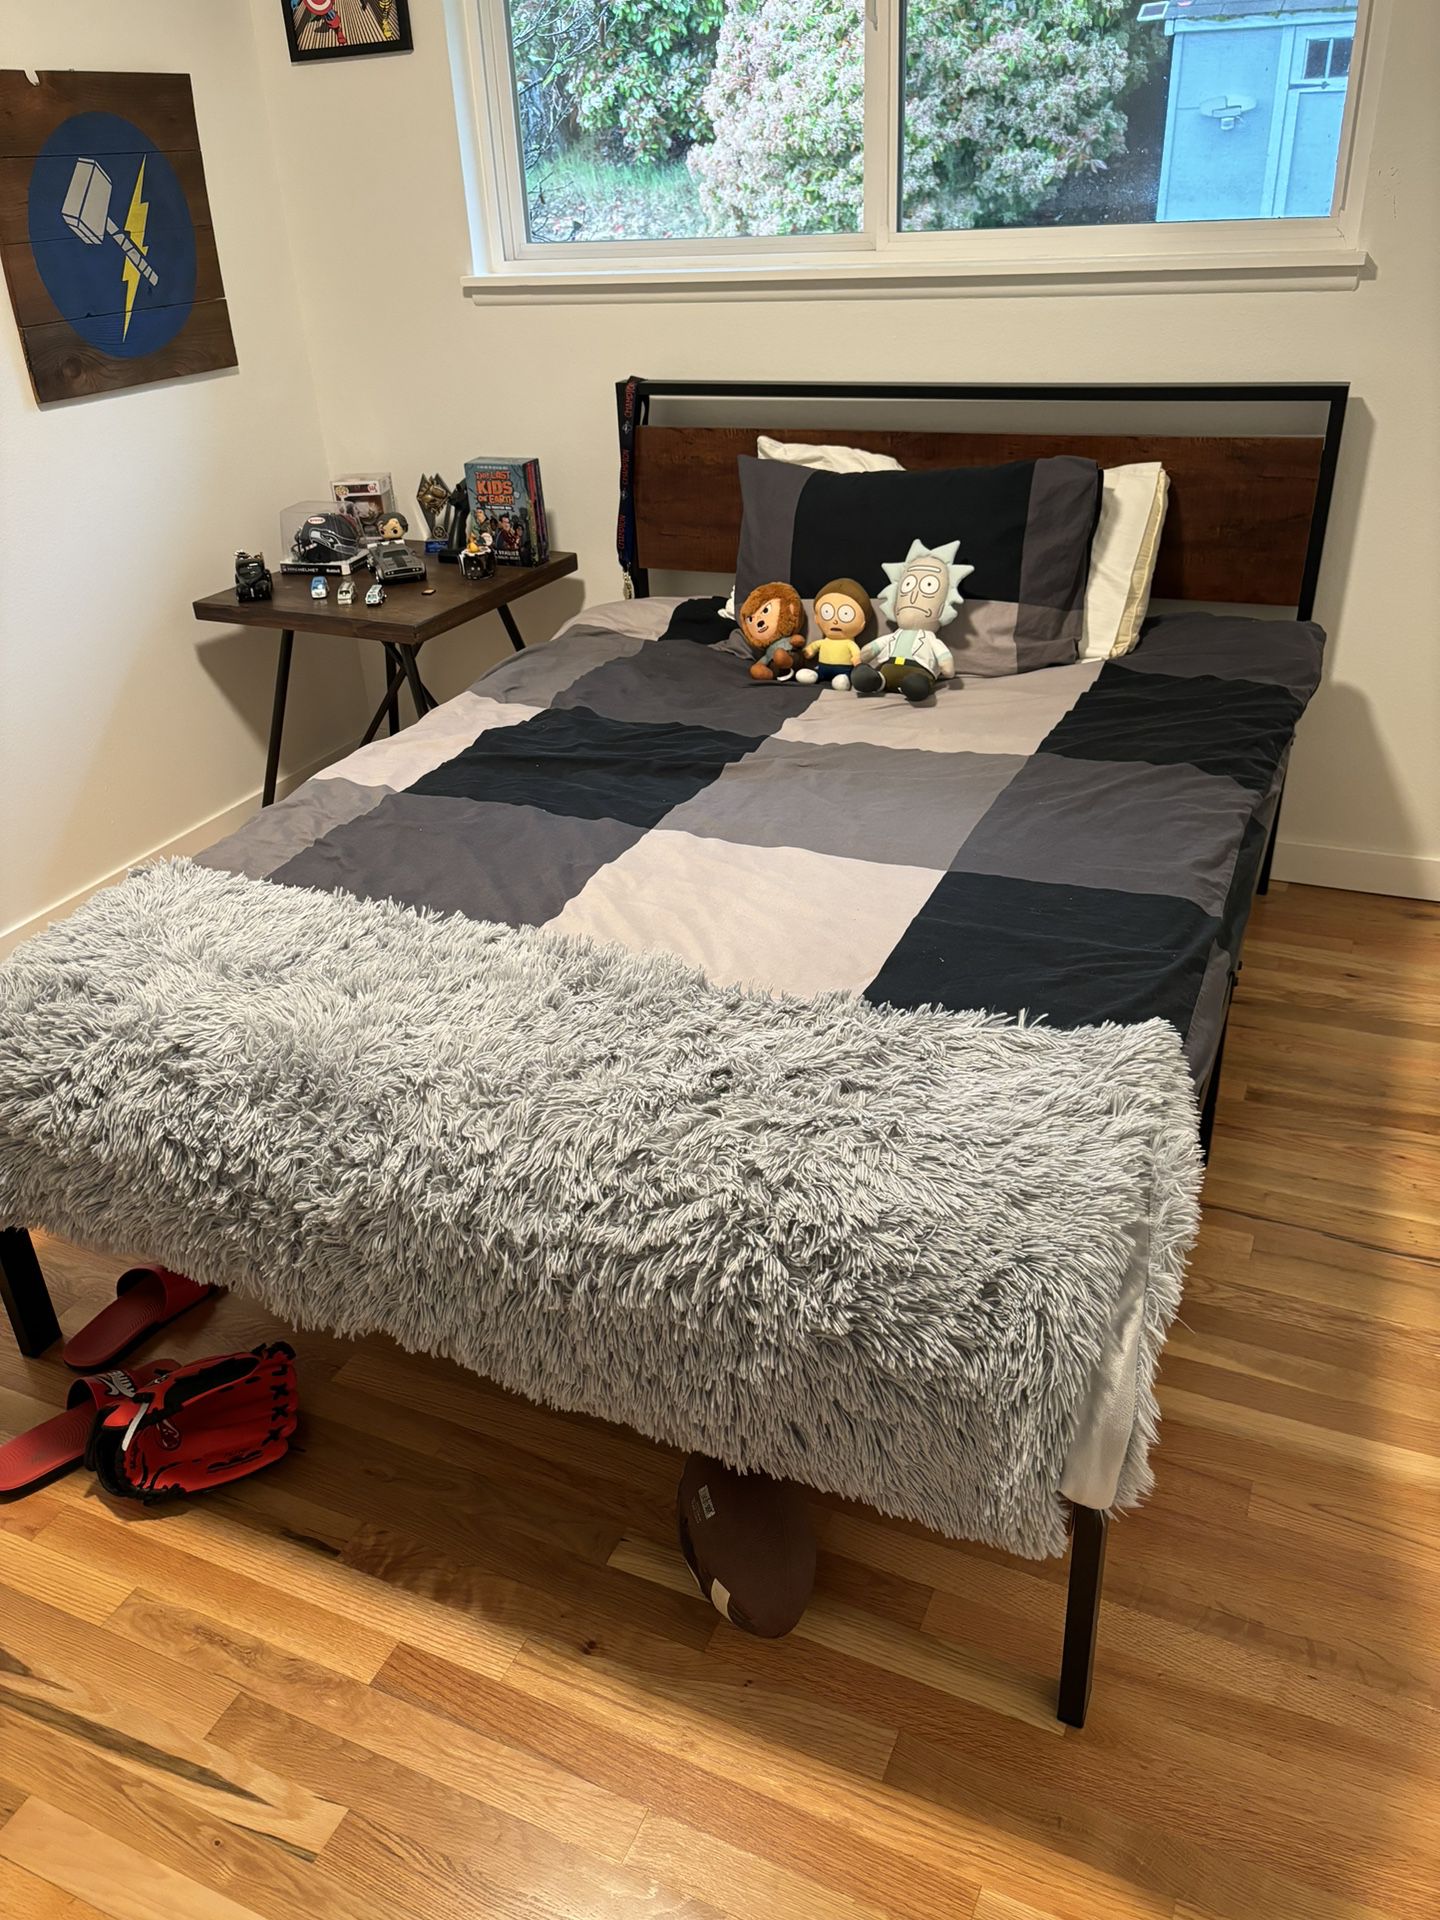 Full Bed Frame And Matteress